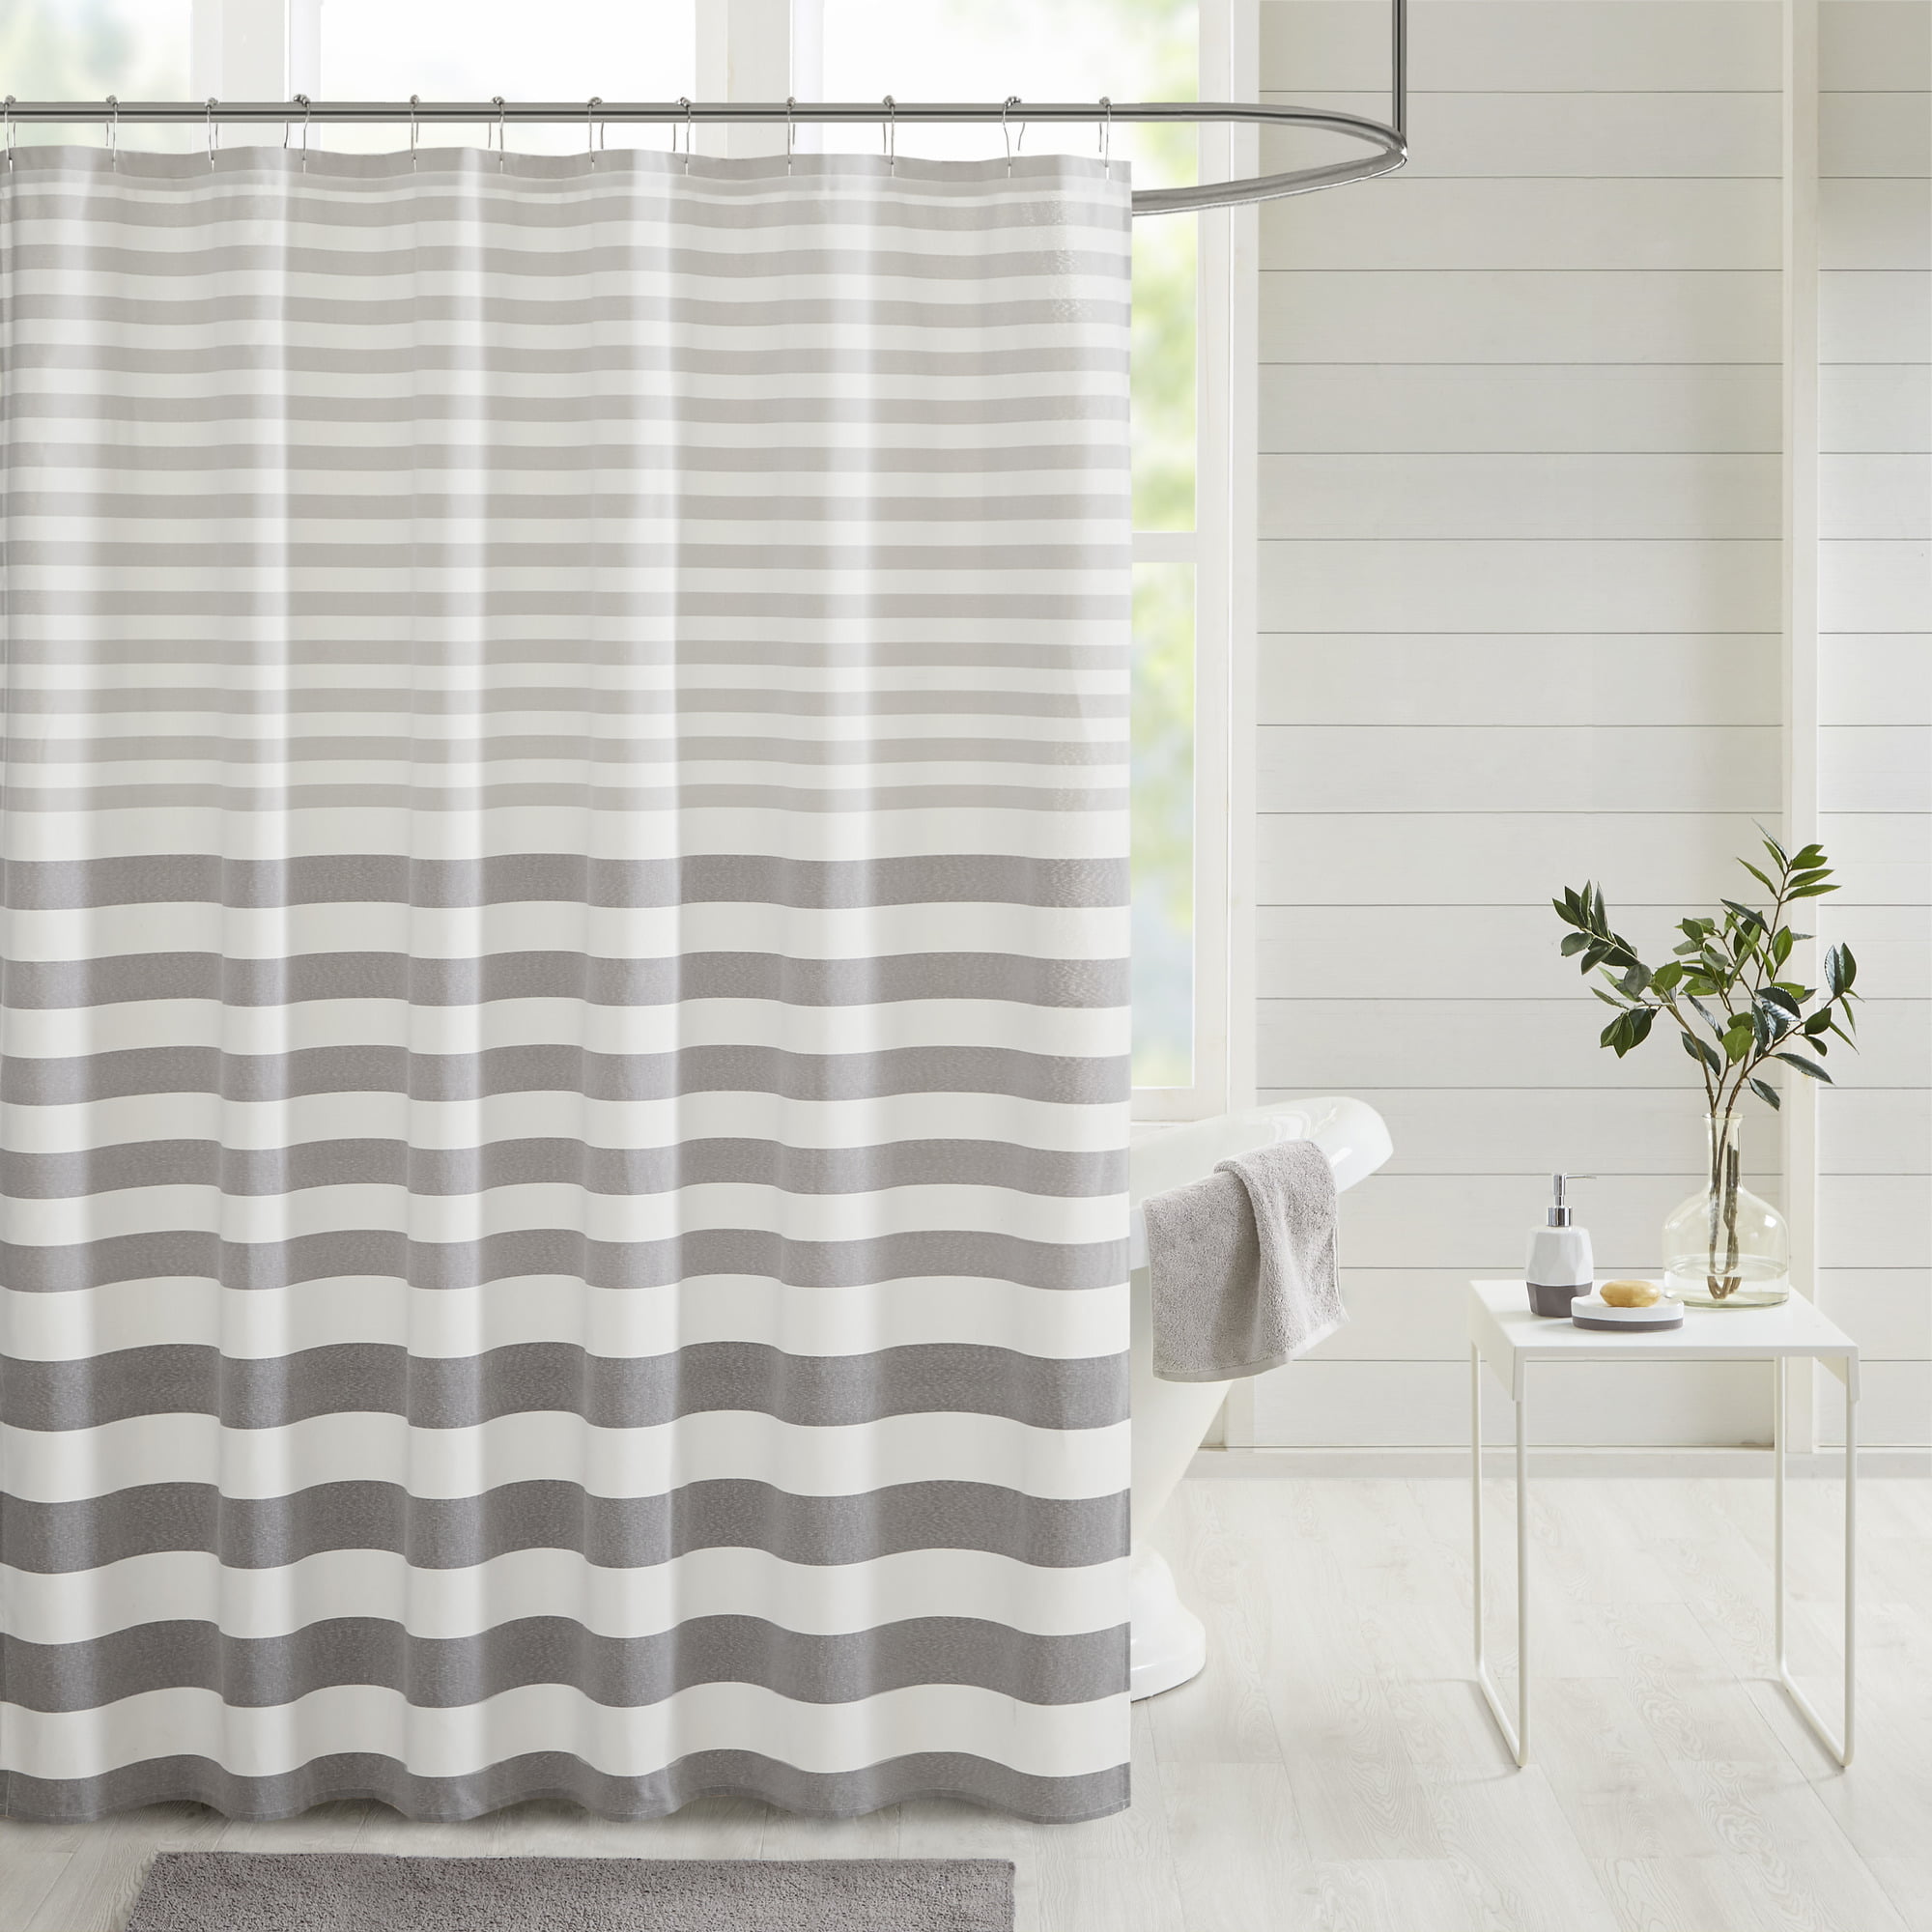 Home Essence Colette Stripe Blended, Dkny Highline Stripe Shower Curtain Gray